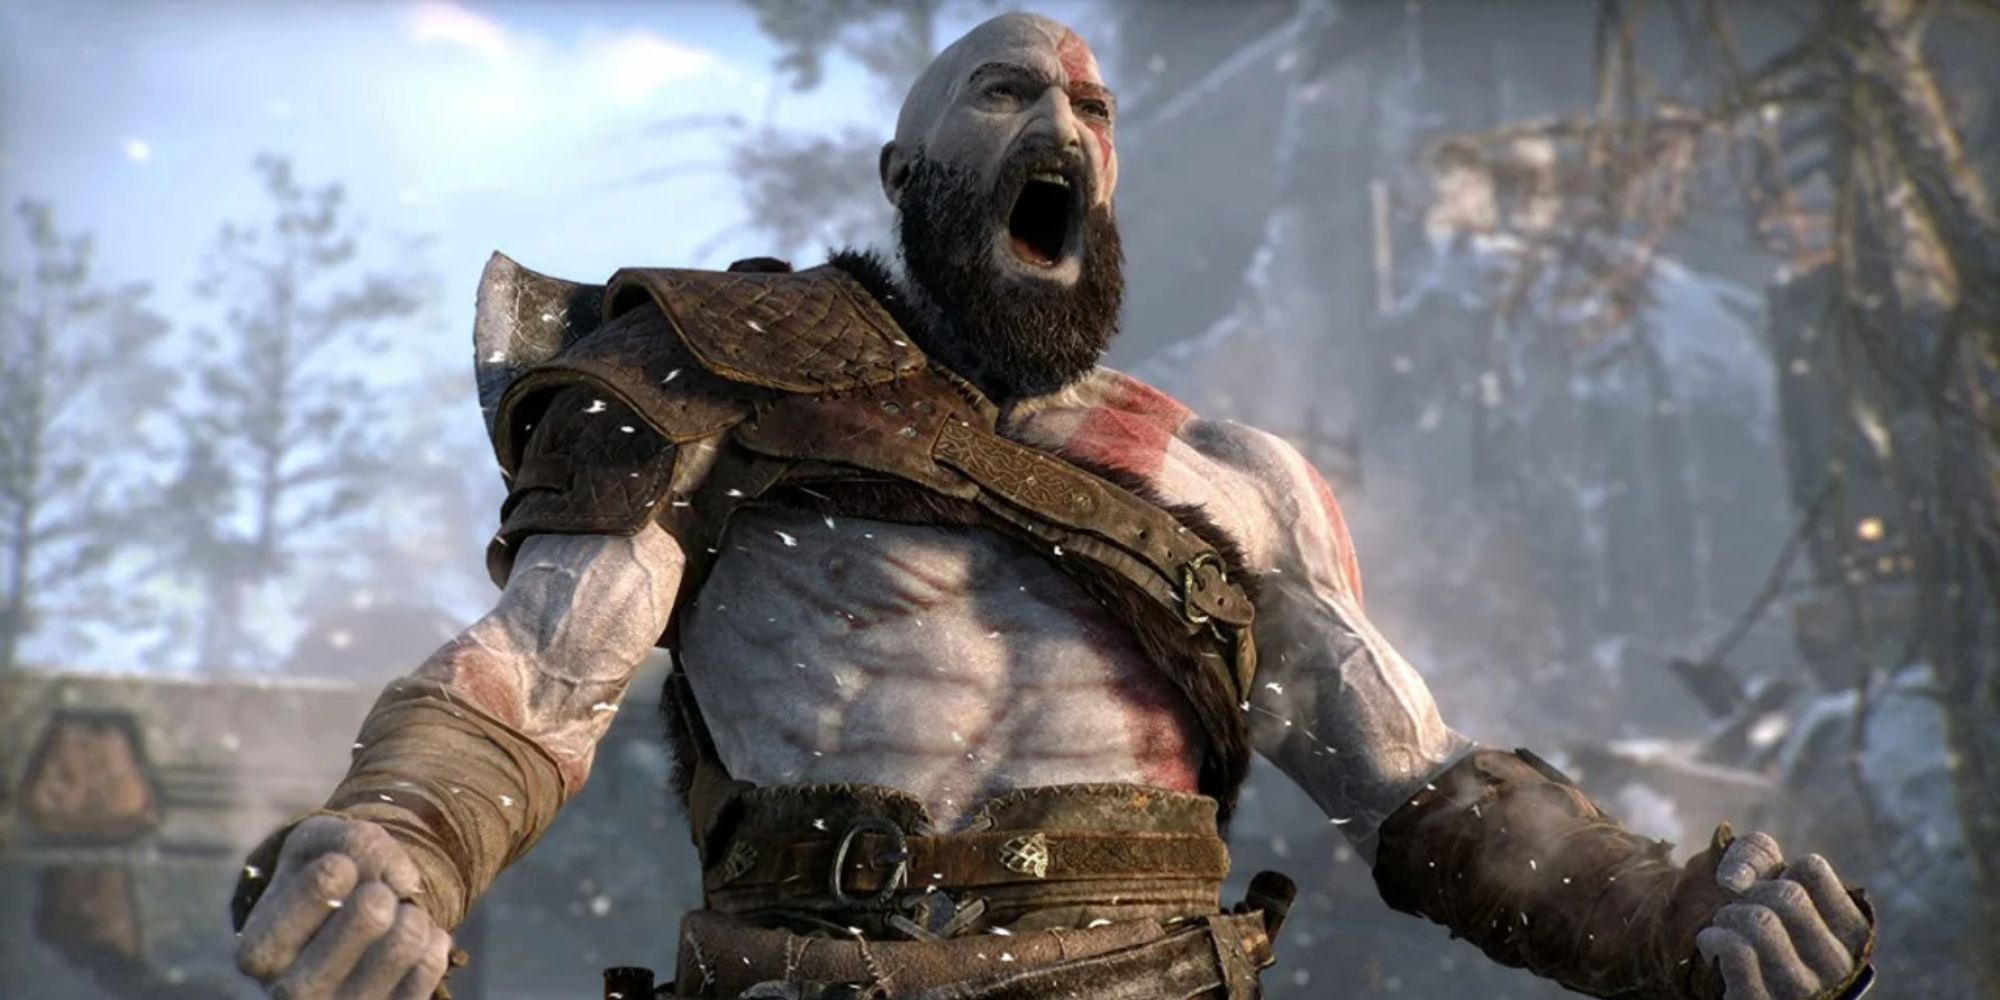 Kratos uses Spartan Rage in God of War.